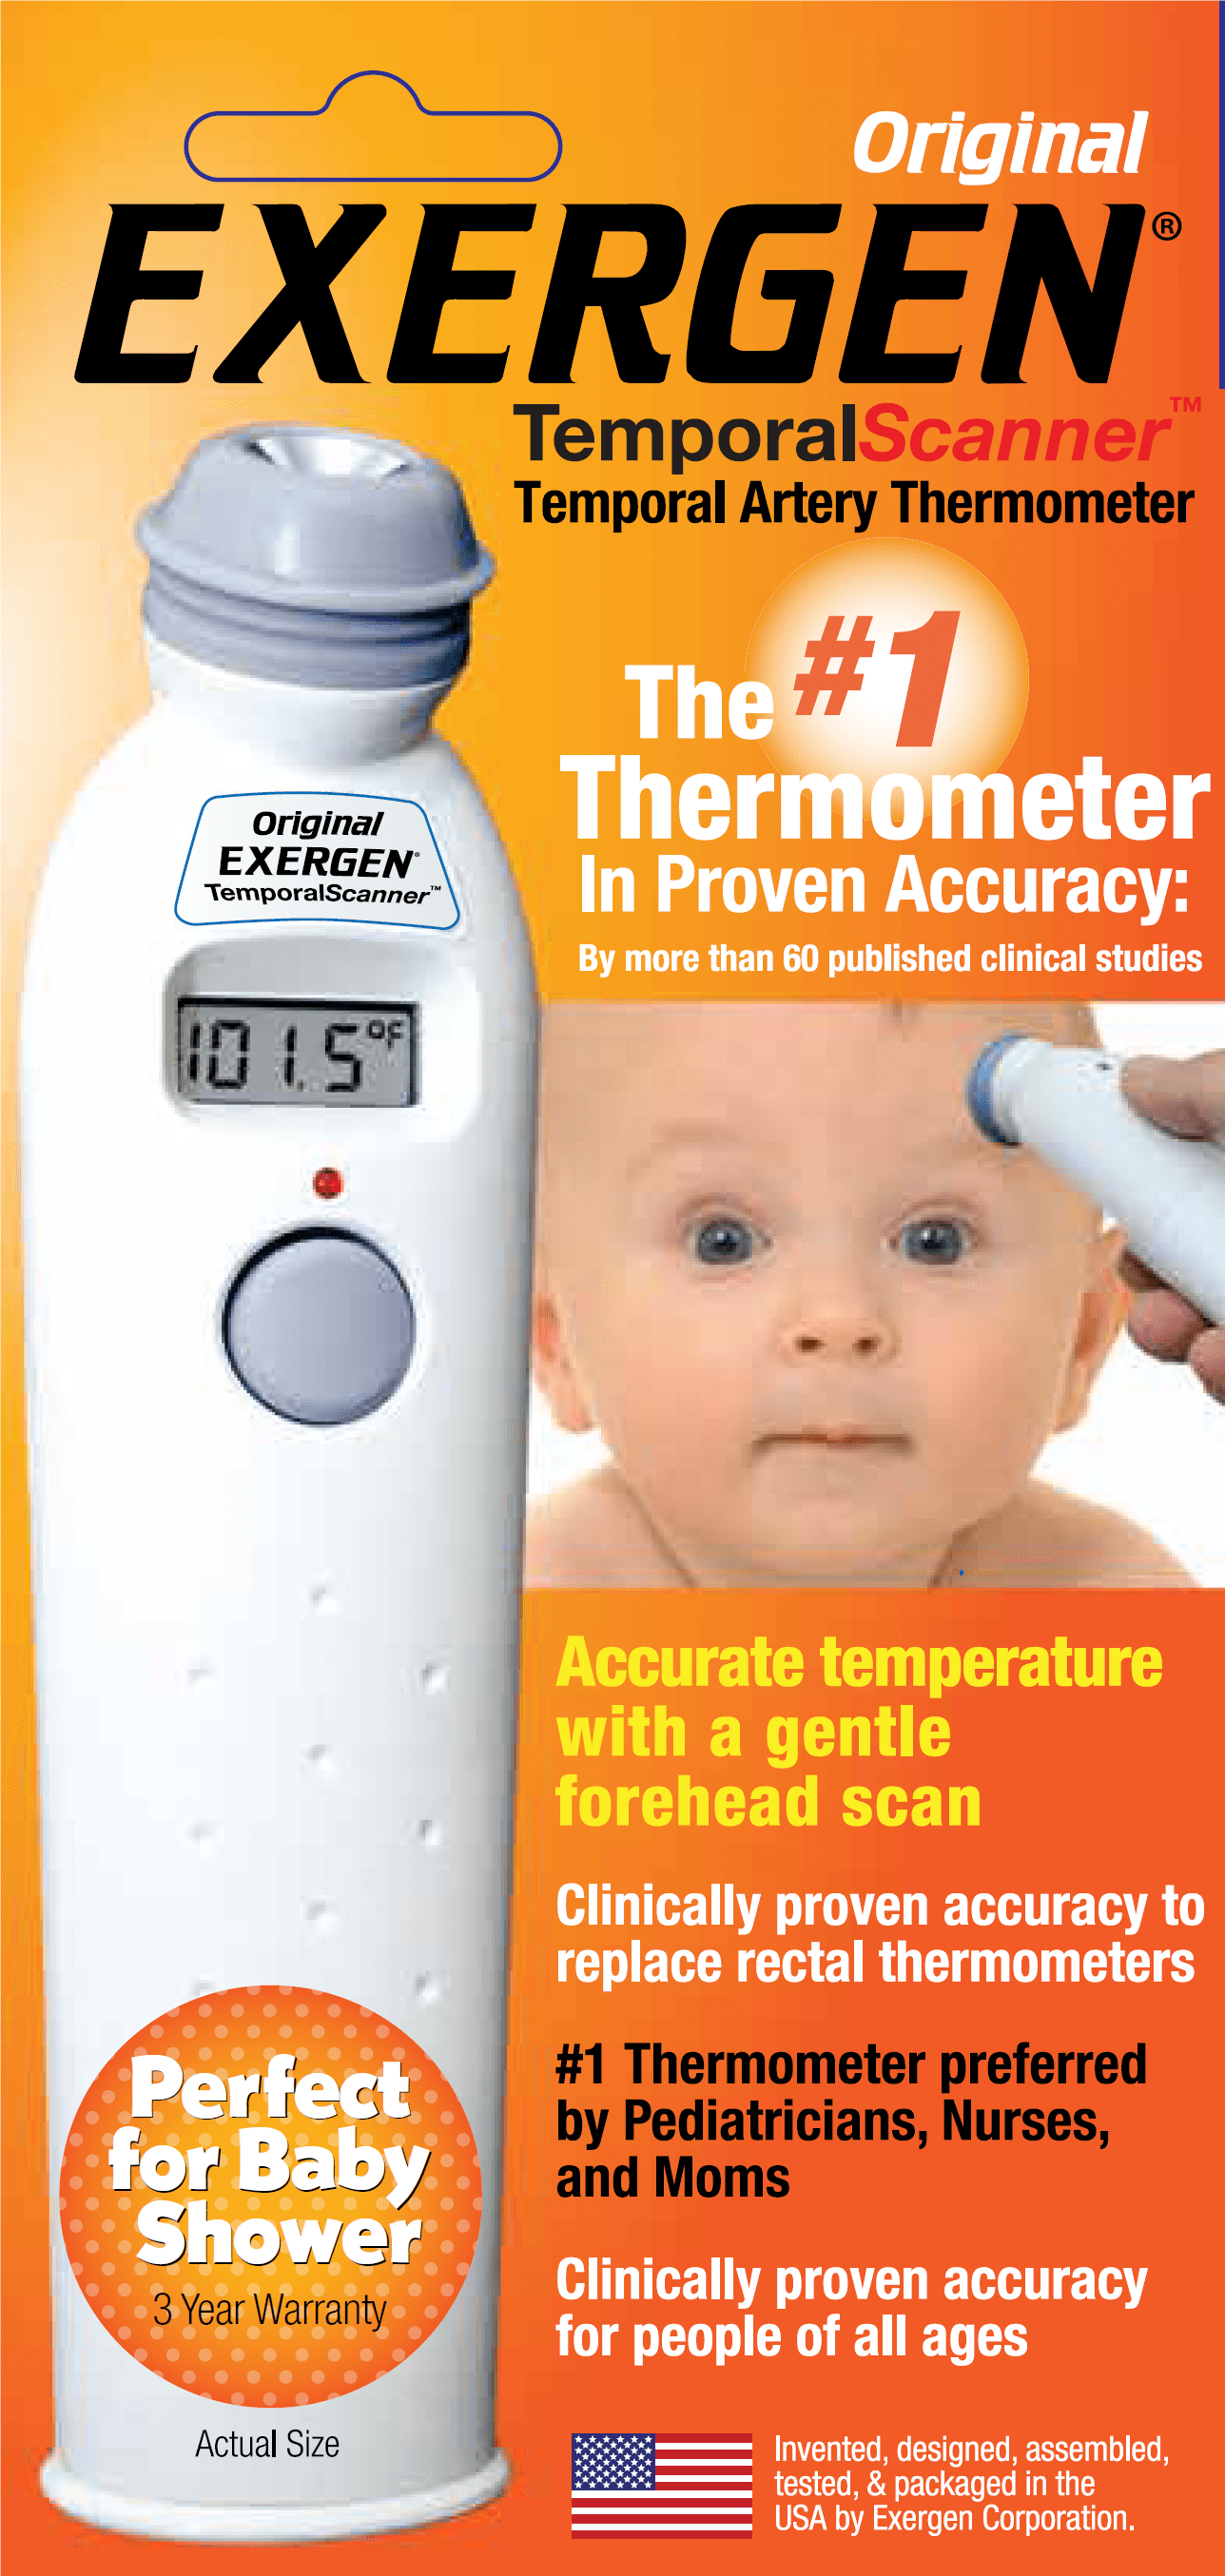 exergen-original-temporal-artery-thermometer-walmart